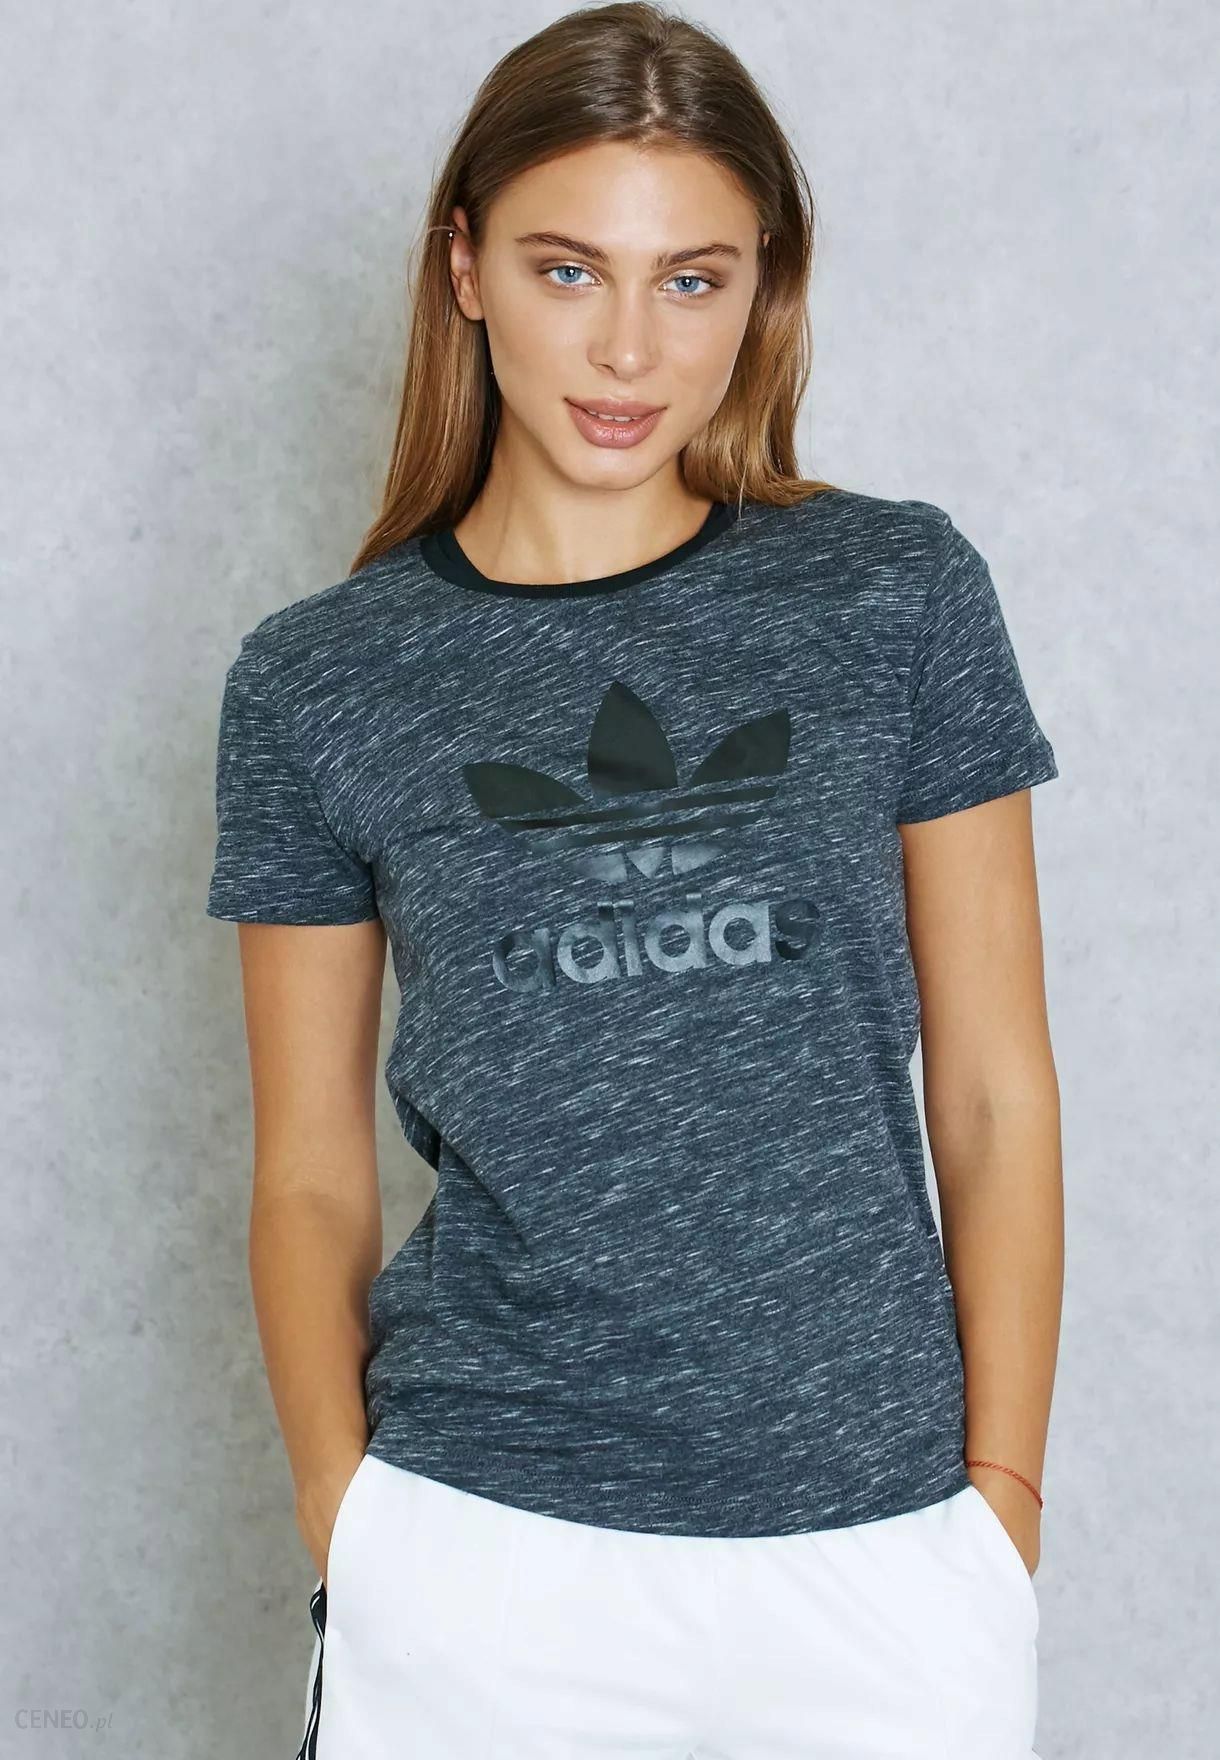 Extraer trabajo Milagroso Adidas Originals T-shirt Damski Trefoil AY7904 S - Ceny i opinie - Ceneo.pl